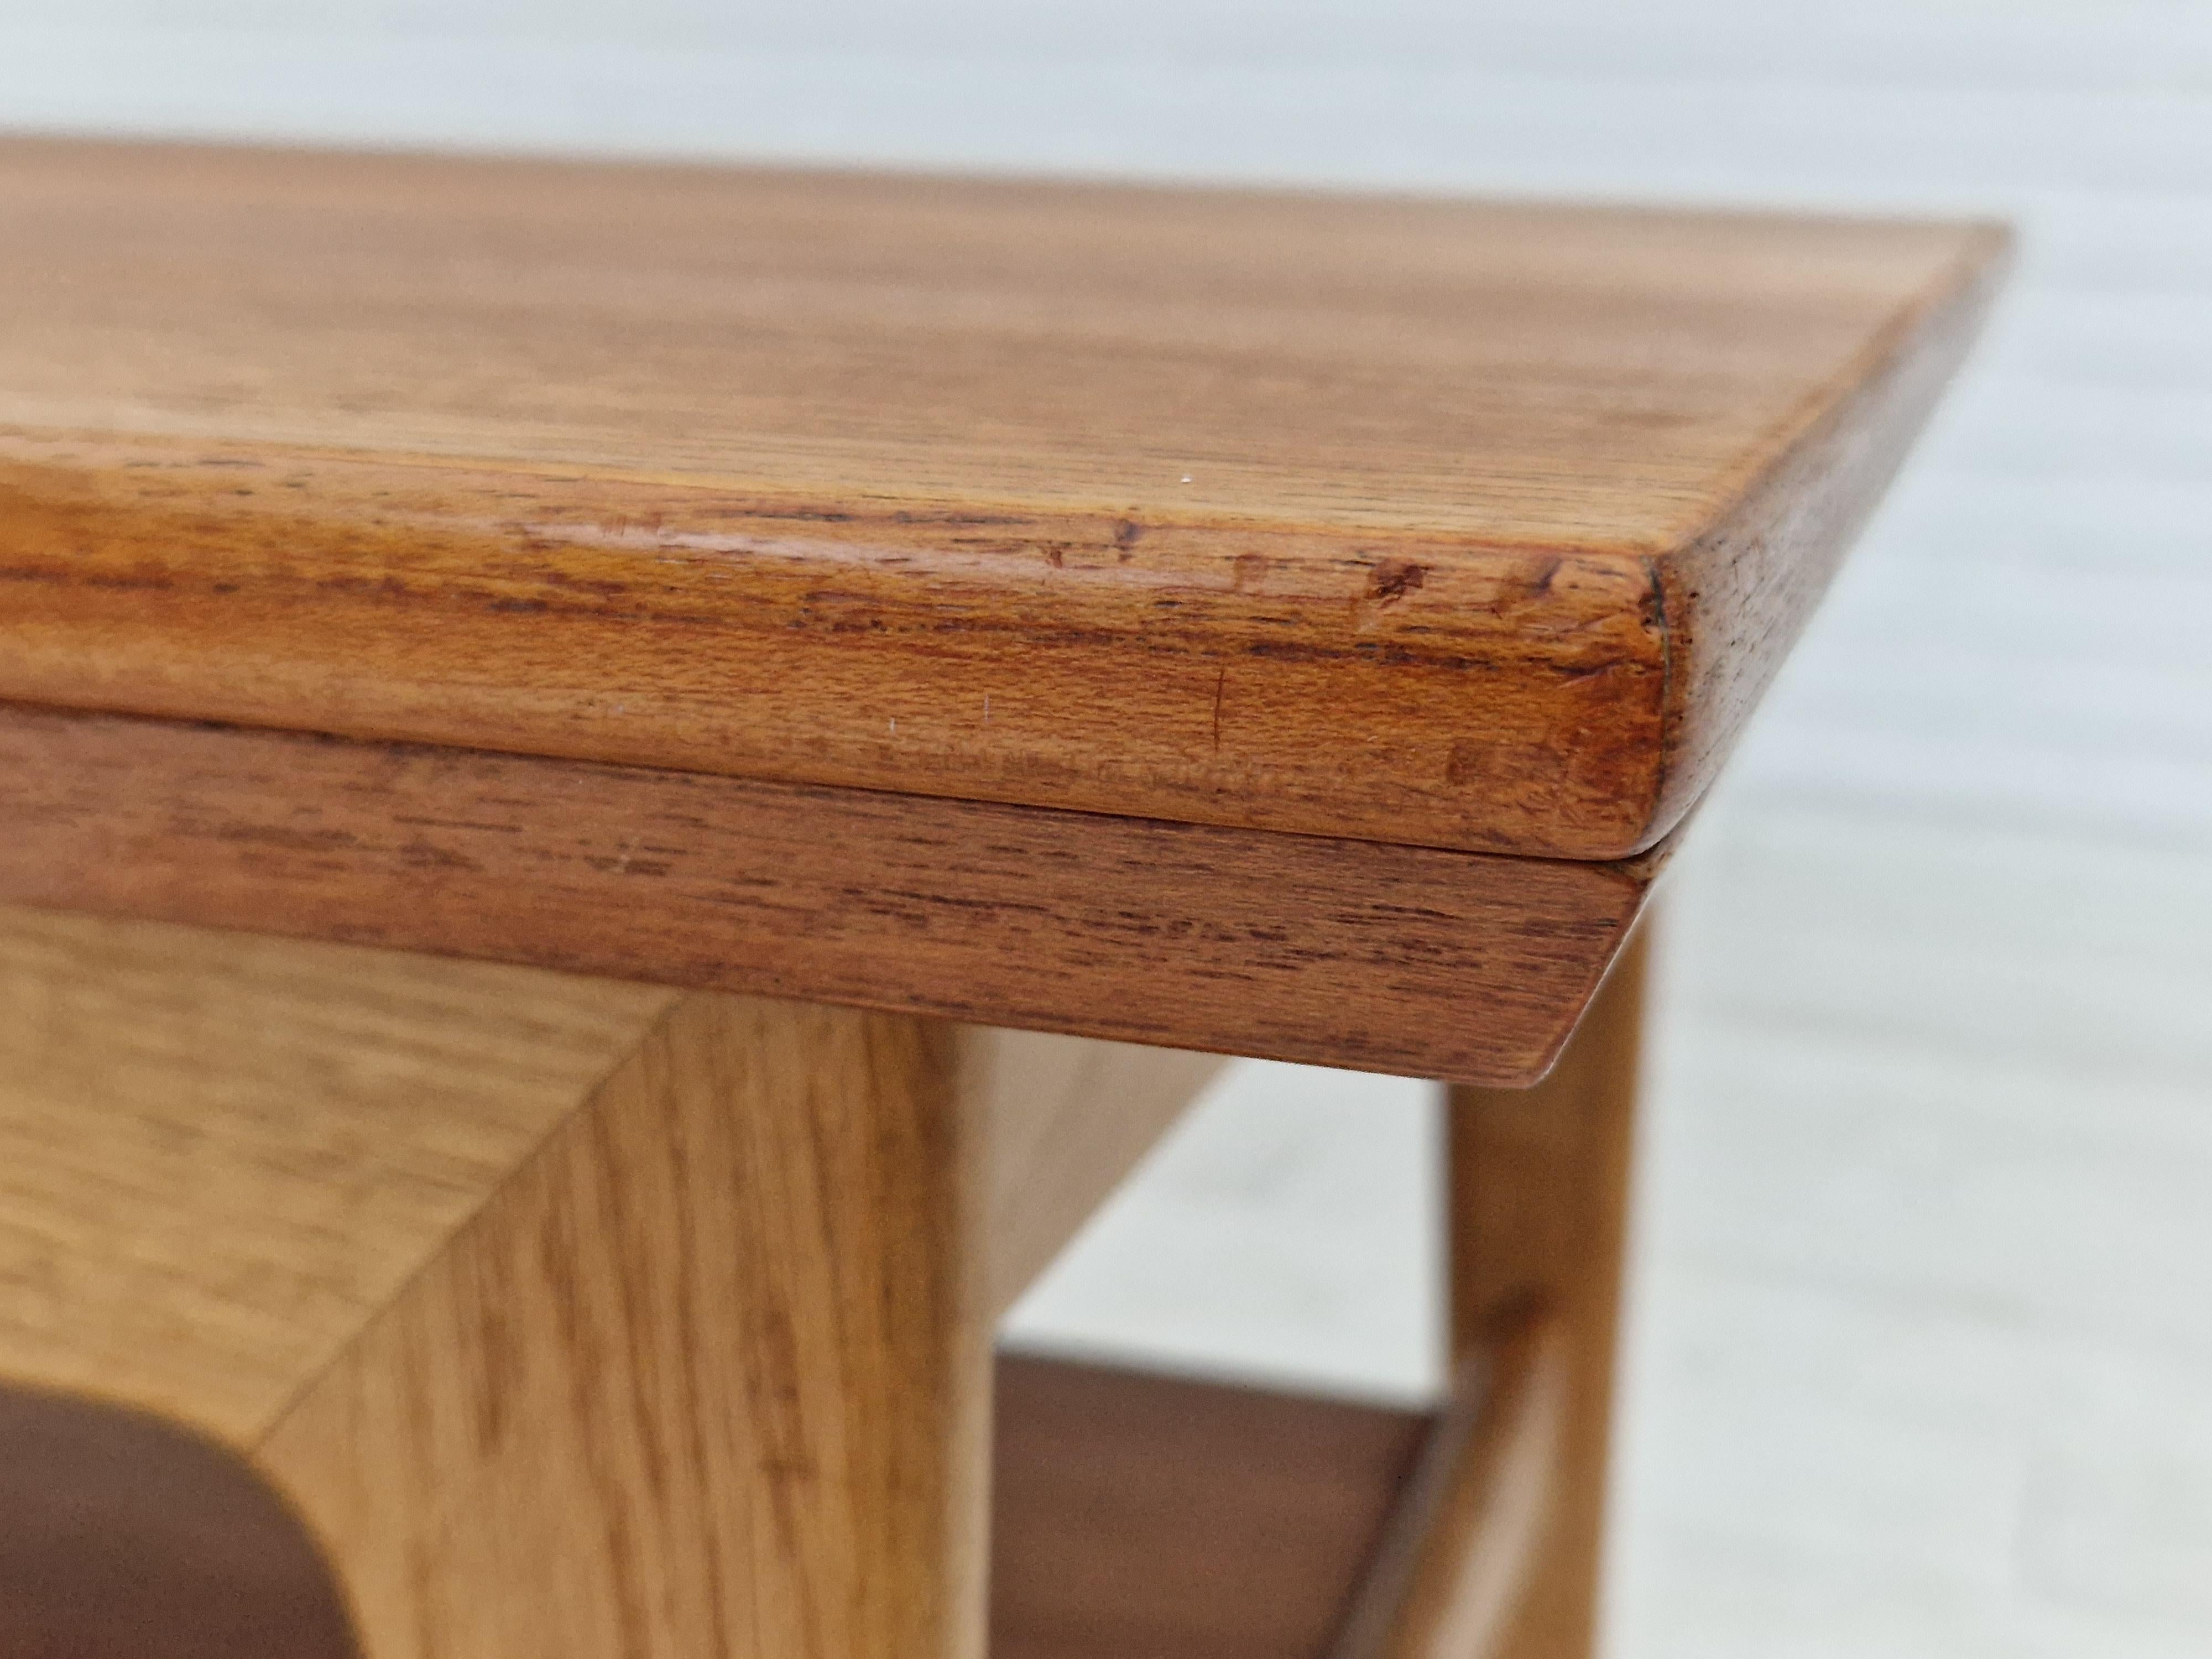 1970s, Danish design. Folding sofa table. Teak wood and oak wood. Tables top of teak wood, legs of oak wood. Shelf of teak wood. Original very good condition: no smells and no stains.